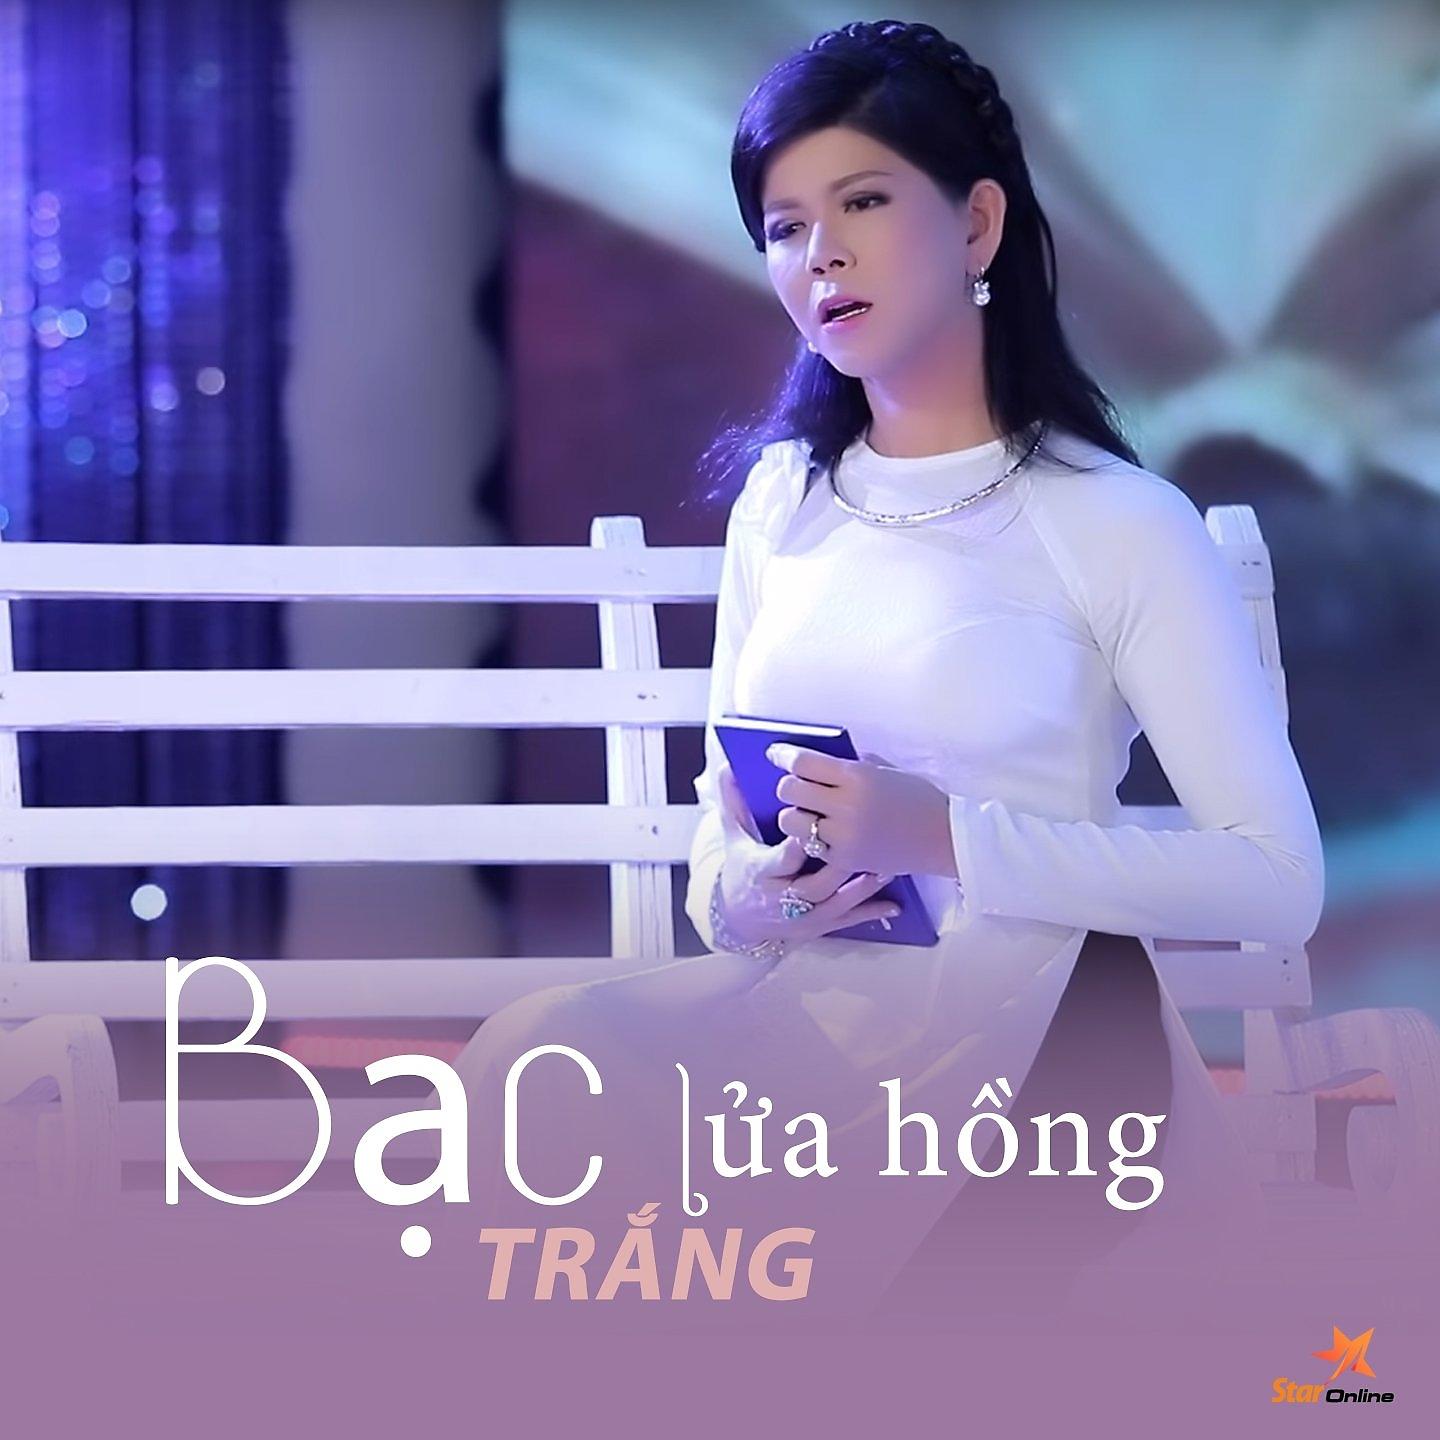 Постер альбома Bạc Trắng Lửa Hồng